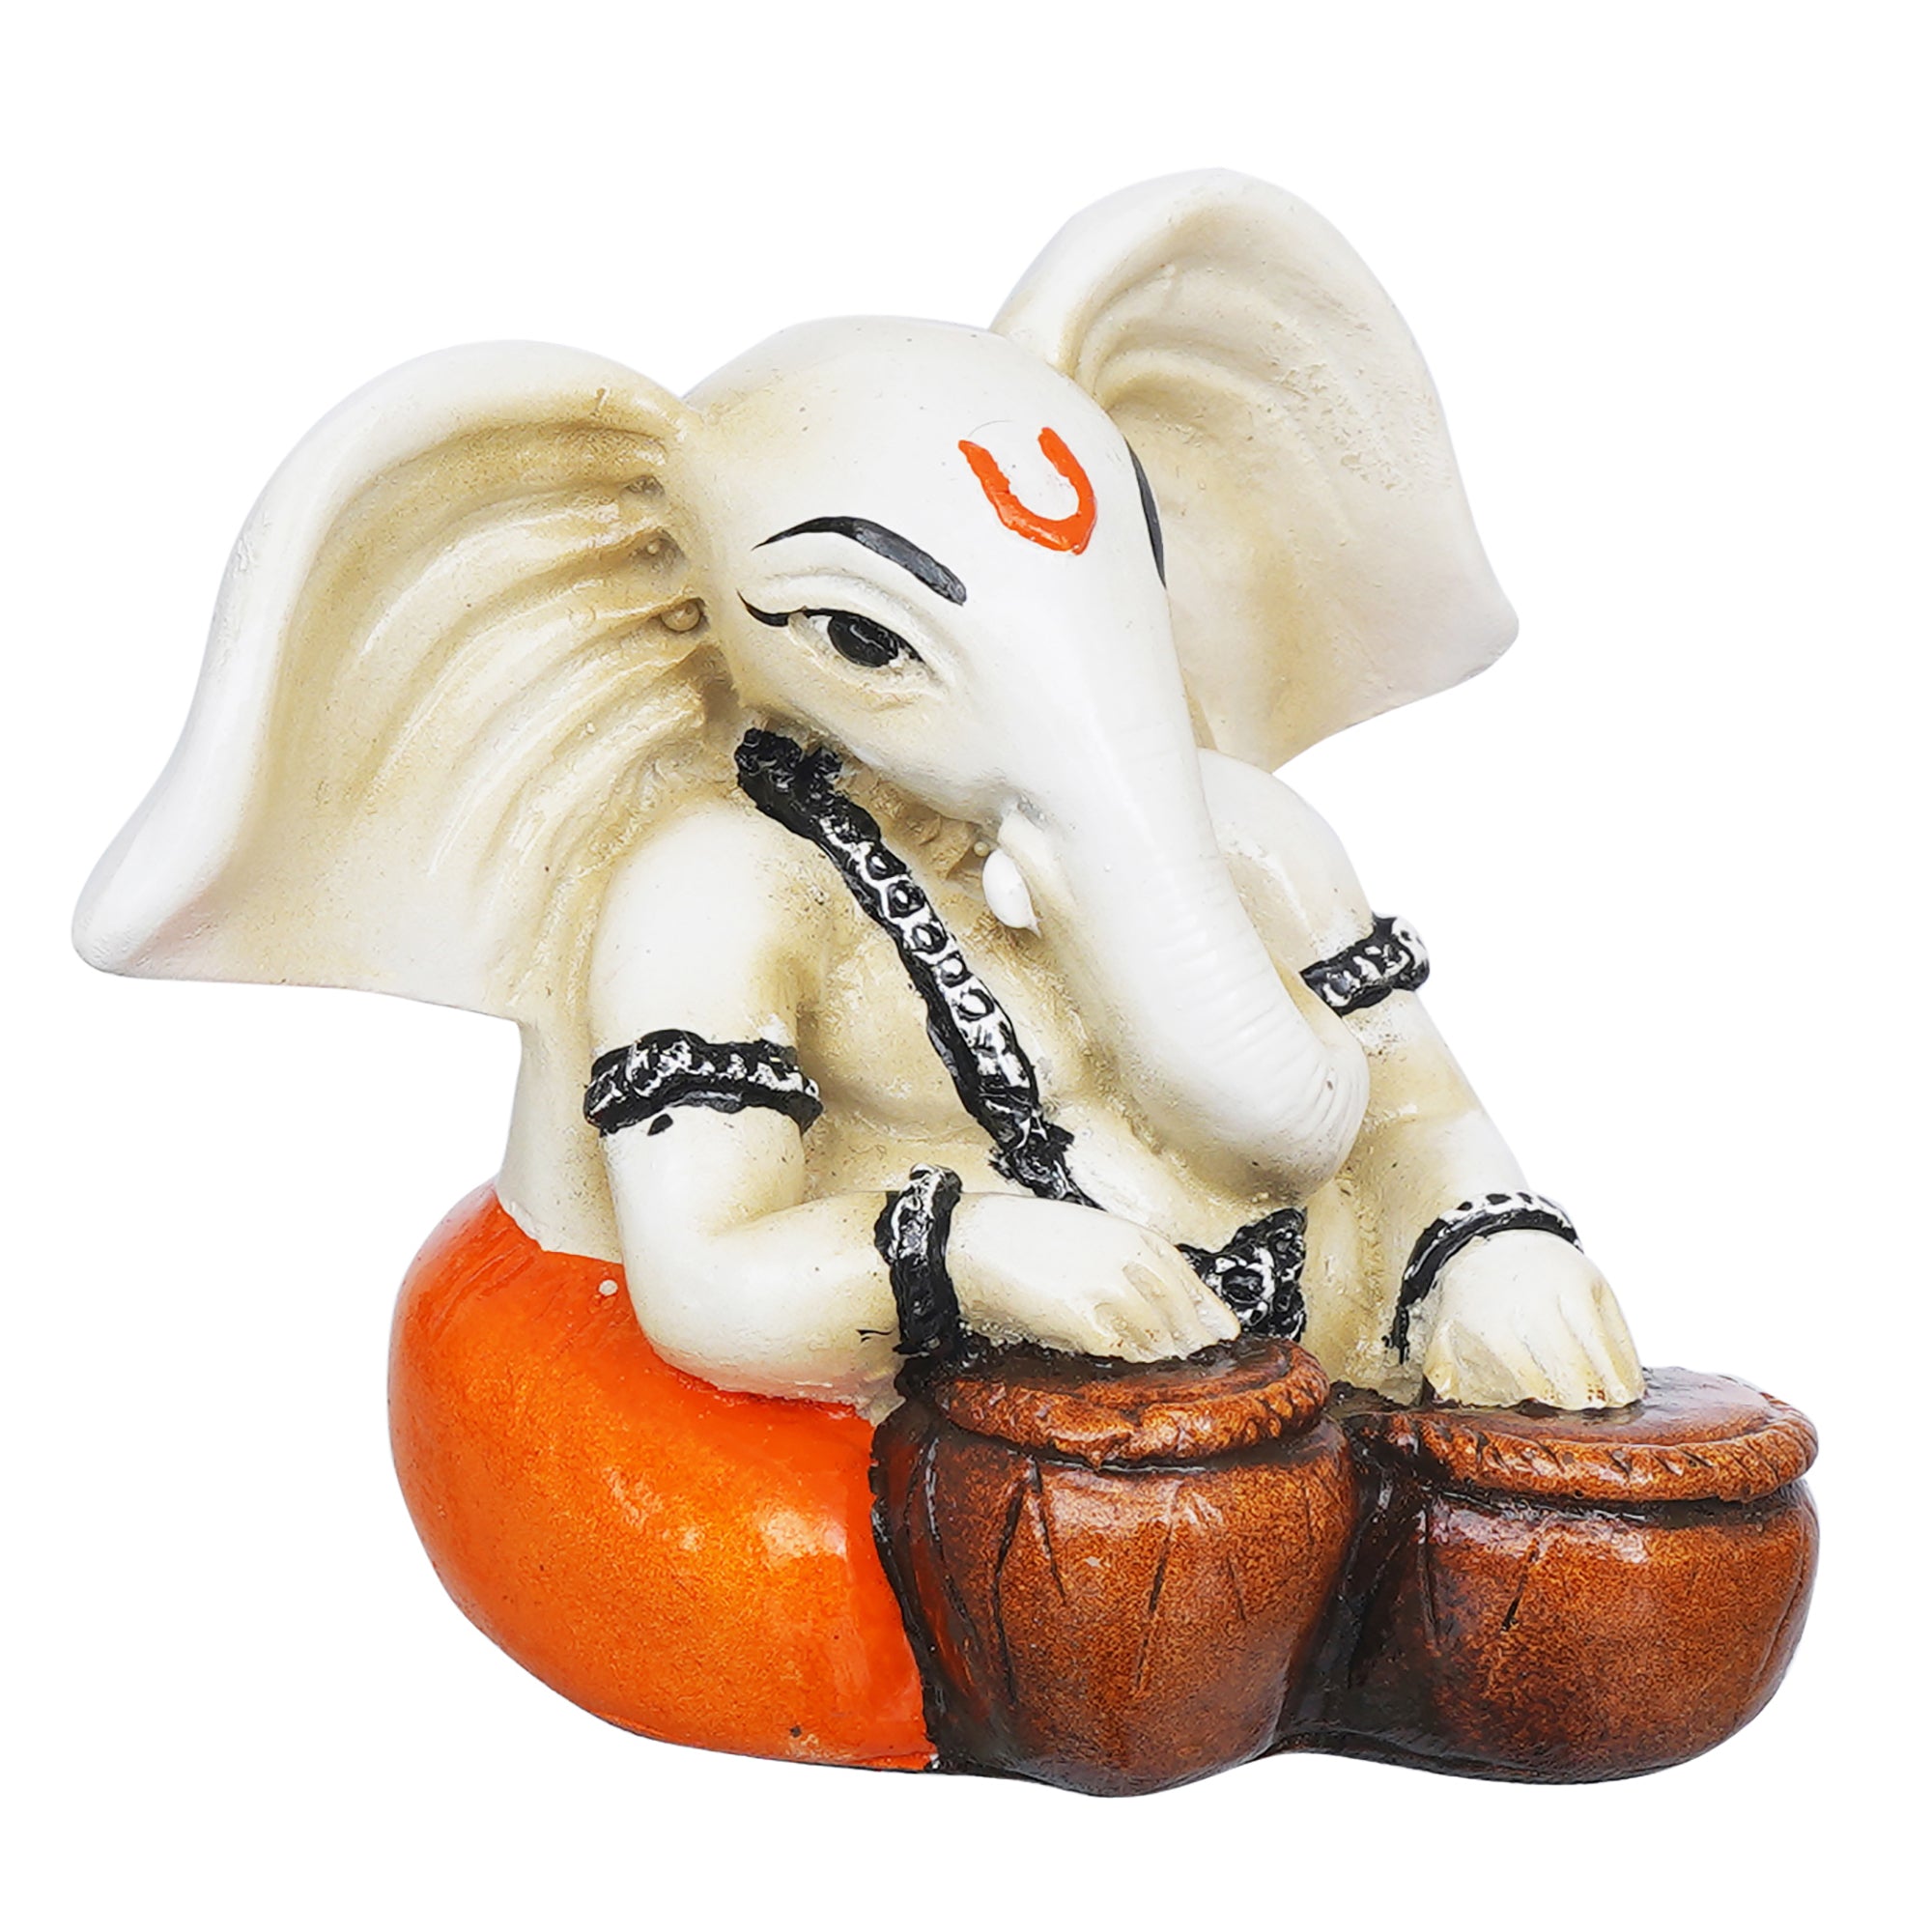 eCraftIndia White & Orange Polyresin Handcrafted Lord Ganesha Idol Playing Tabla Musical Instrument 6